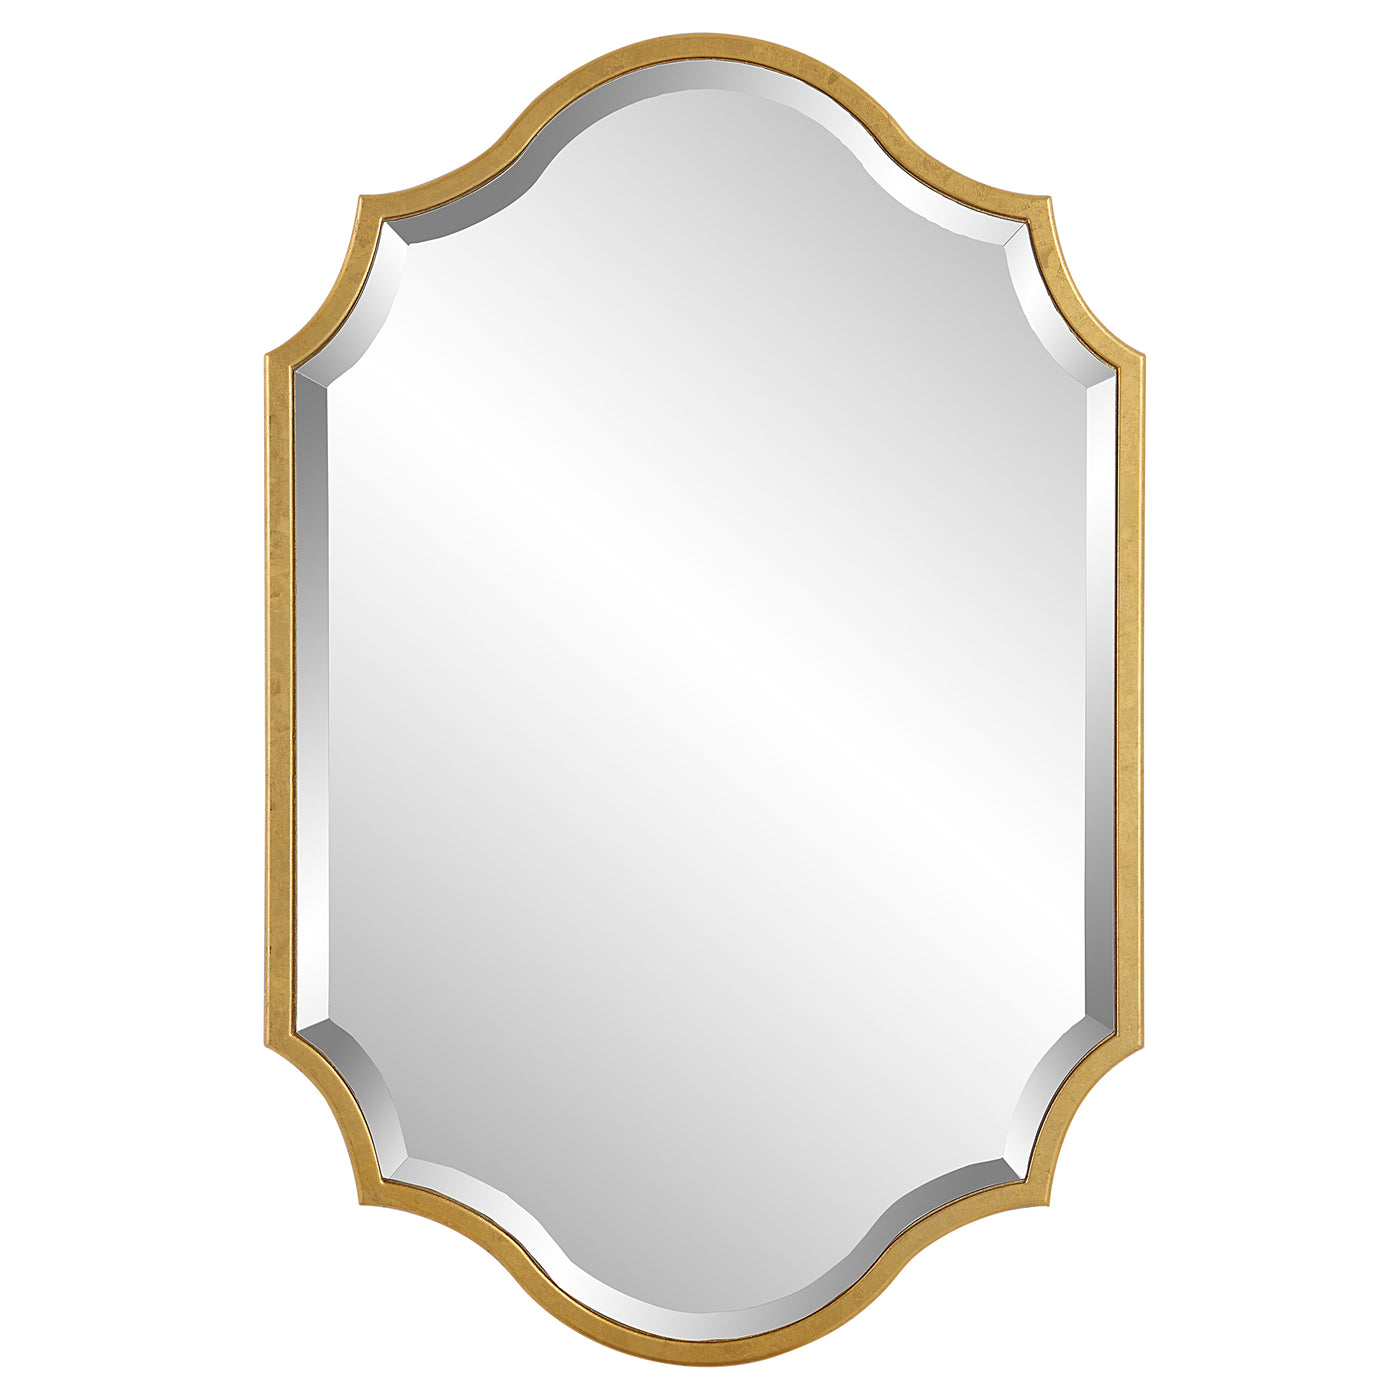 The Rappahonnack Mirror